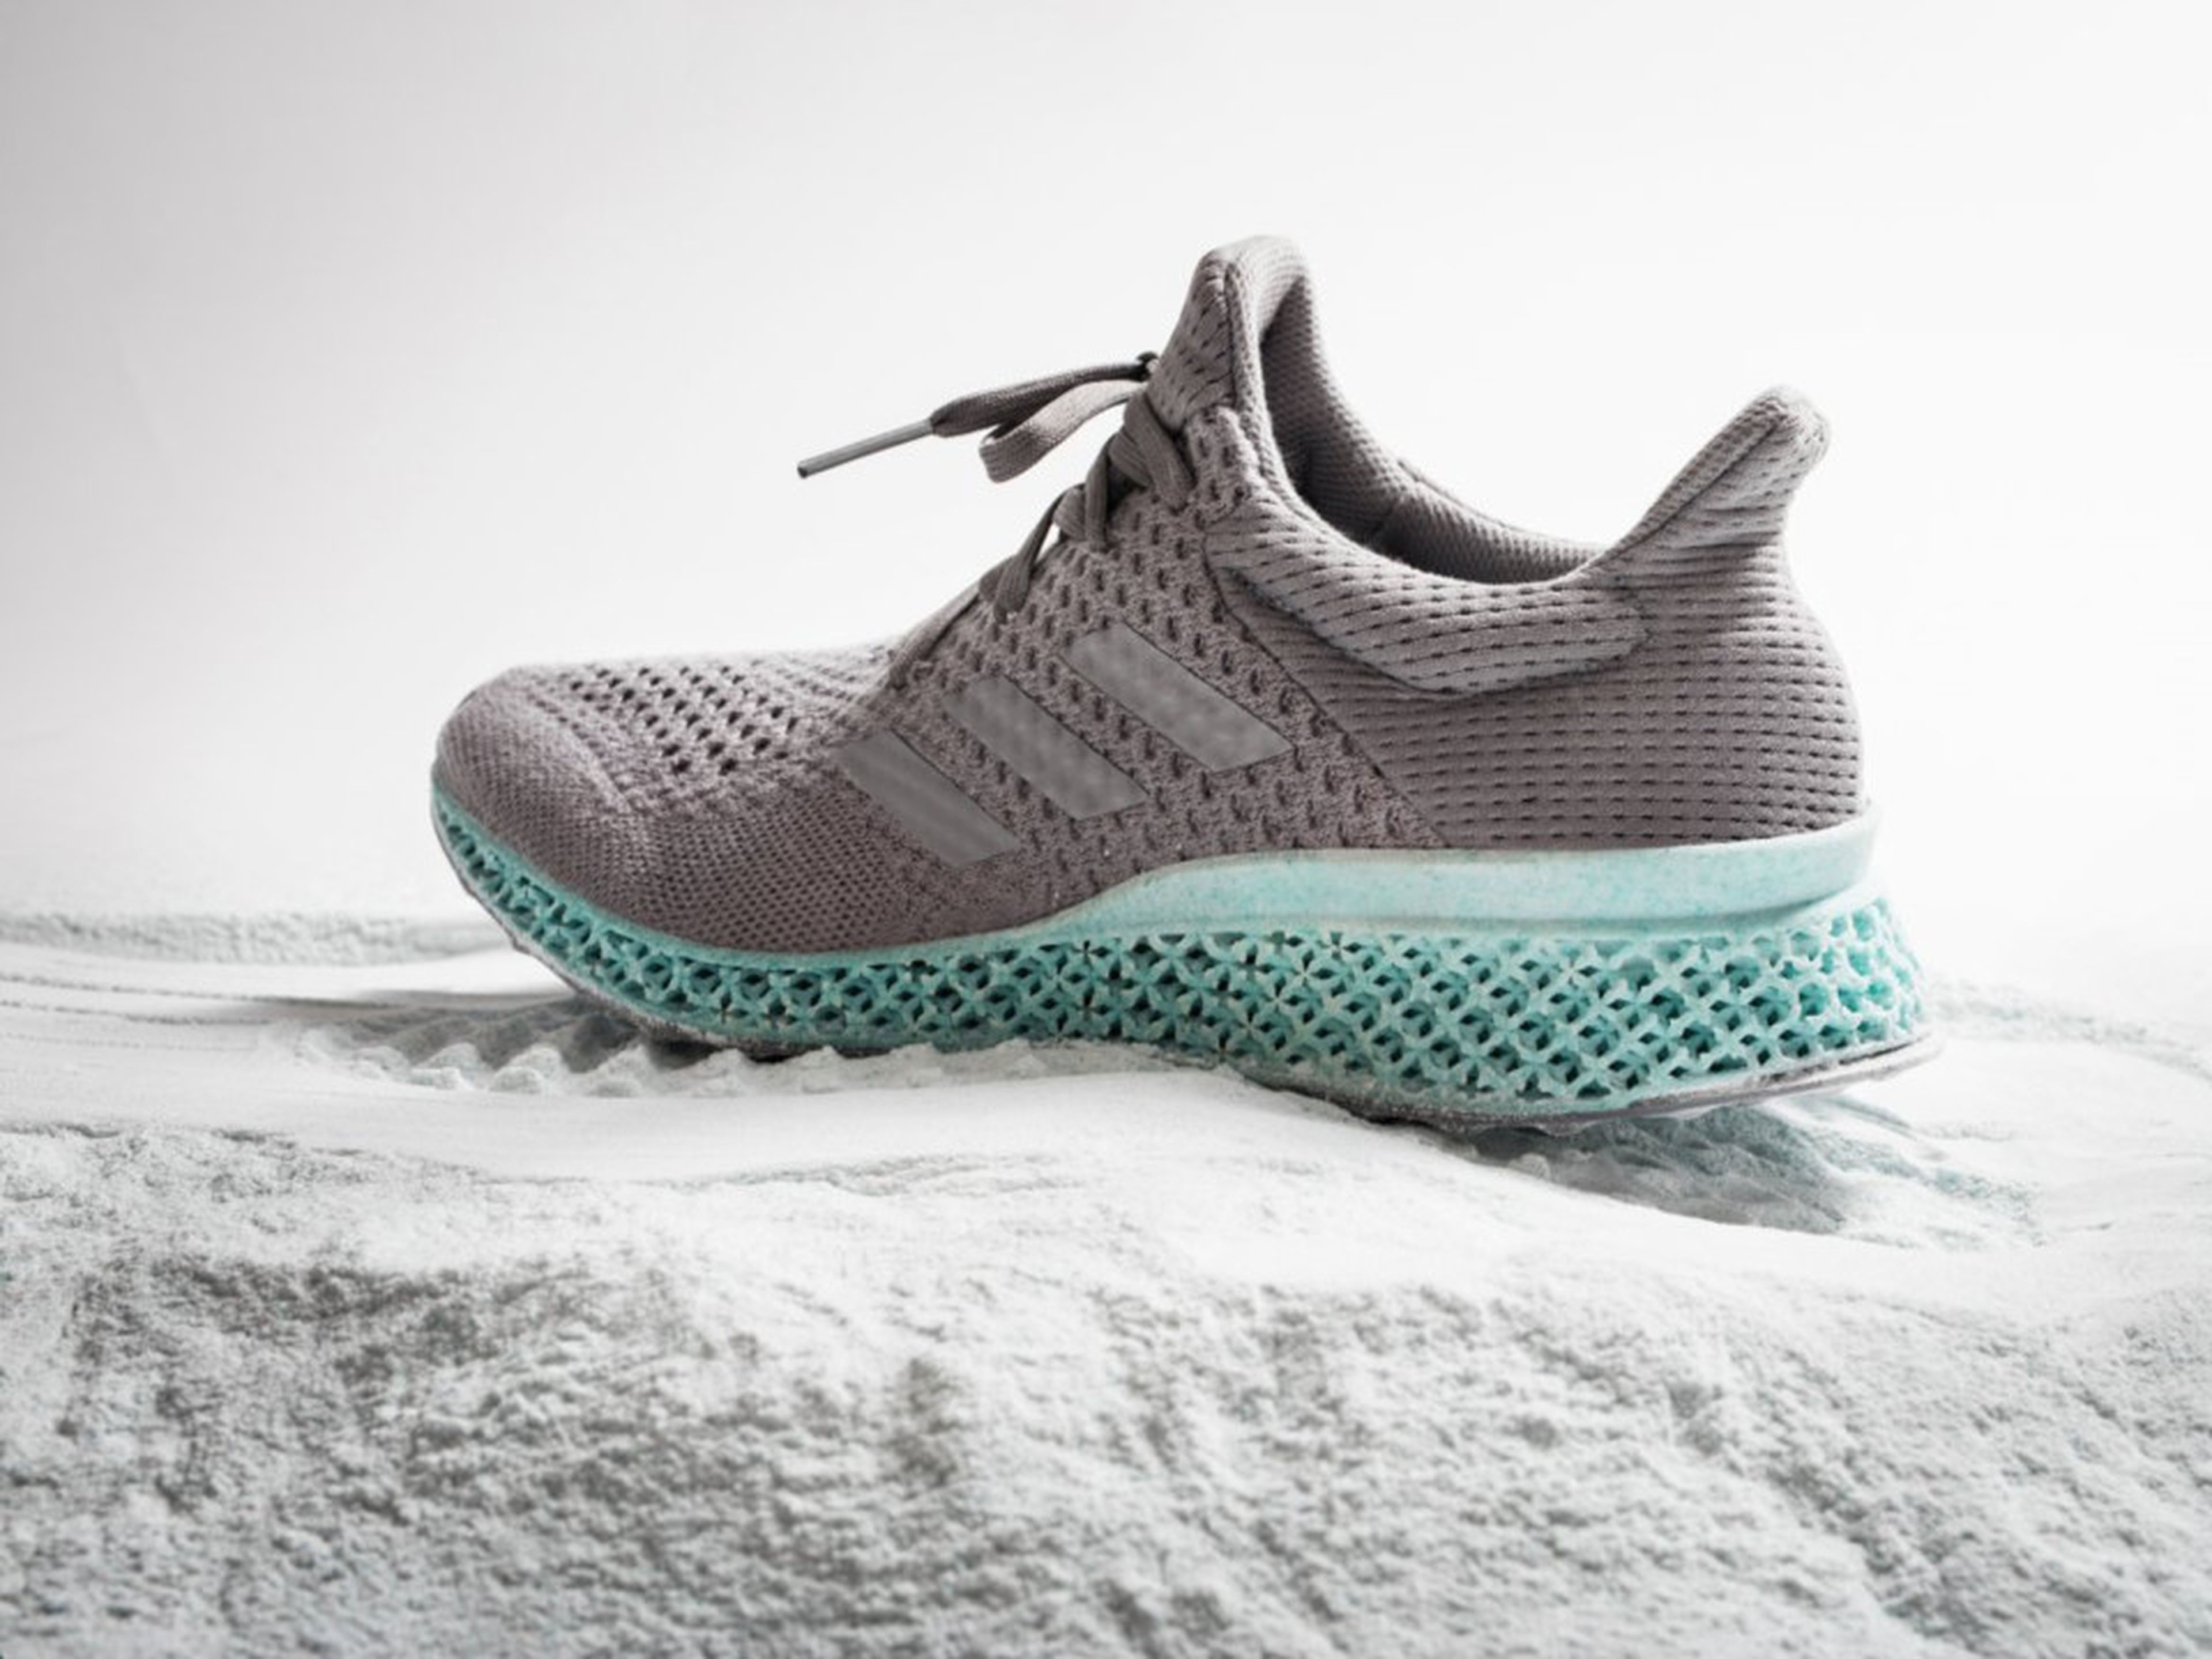 Adidas impresas en 3D